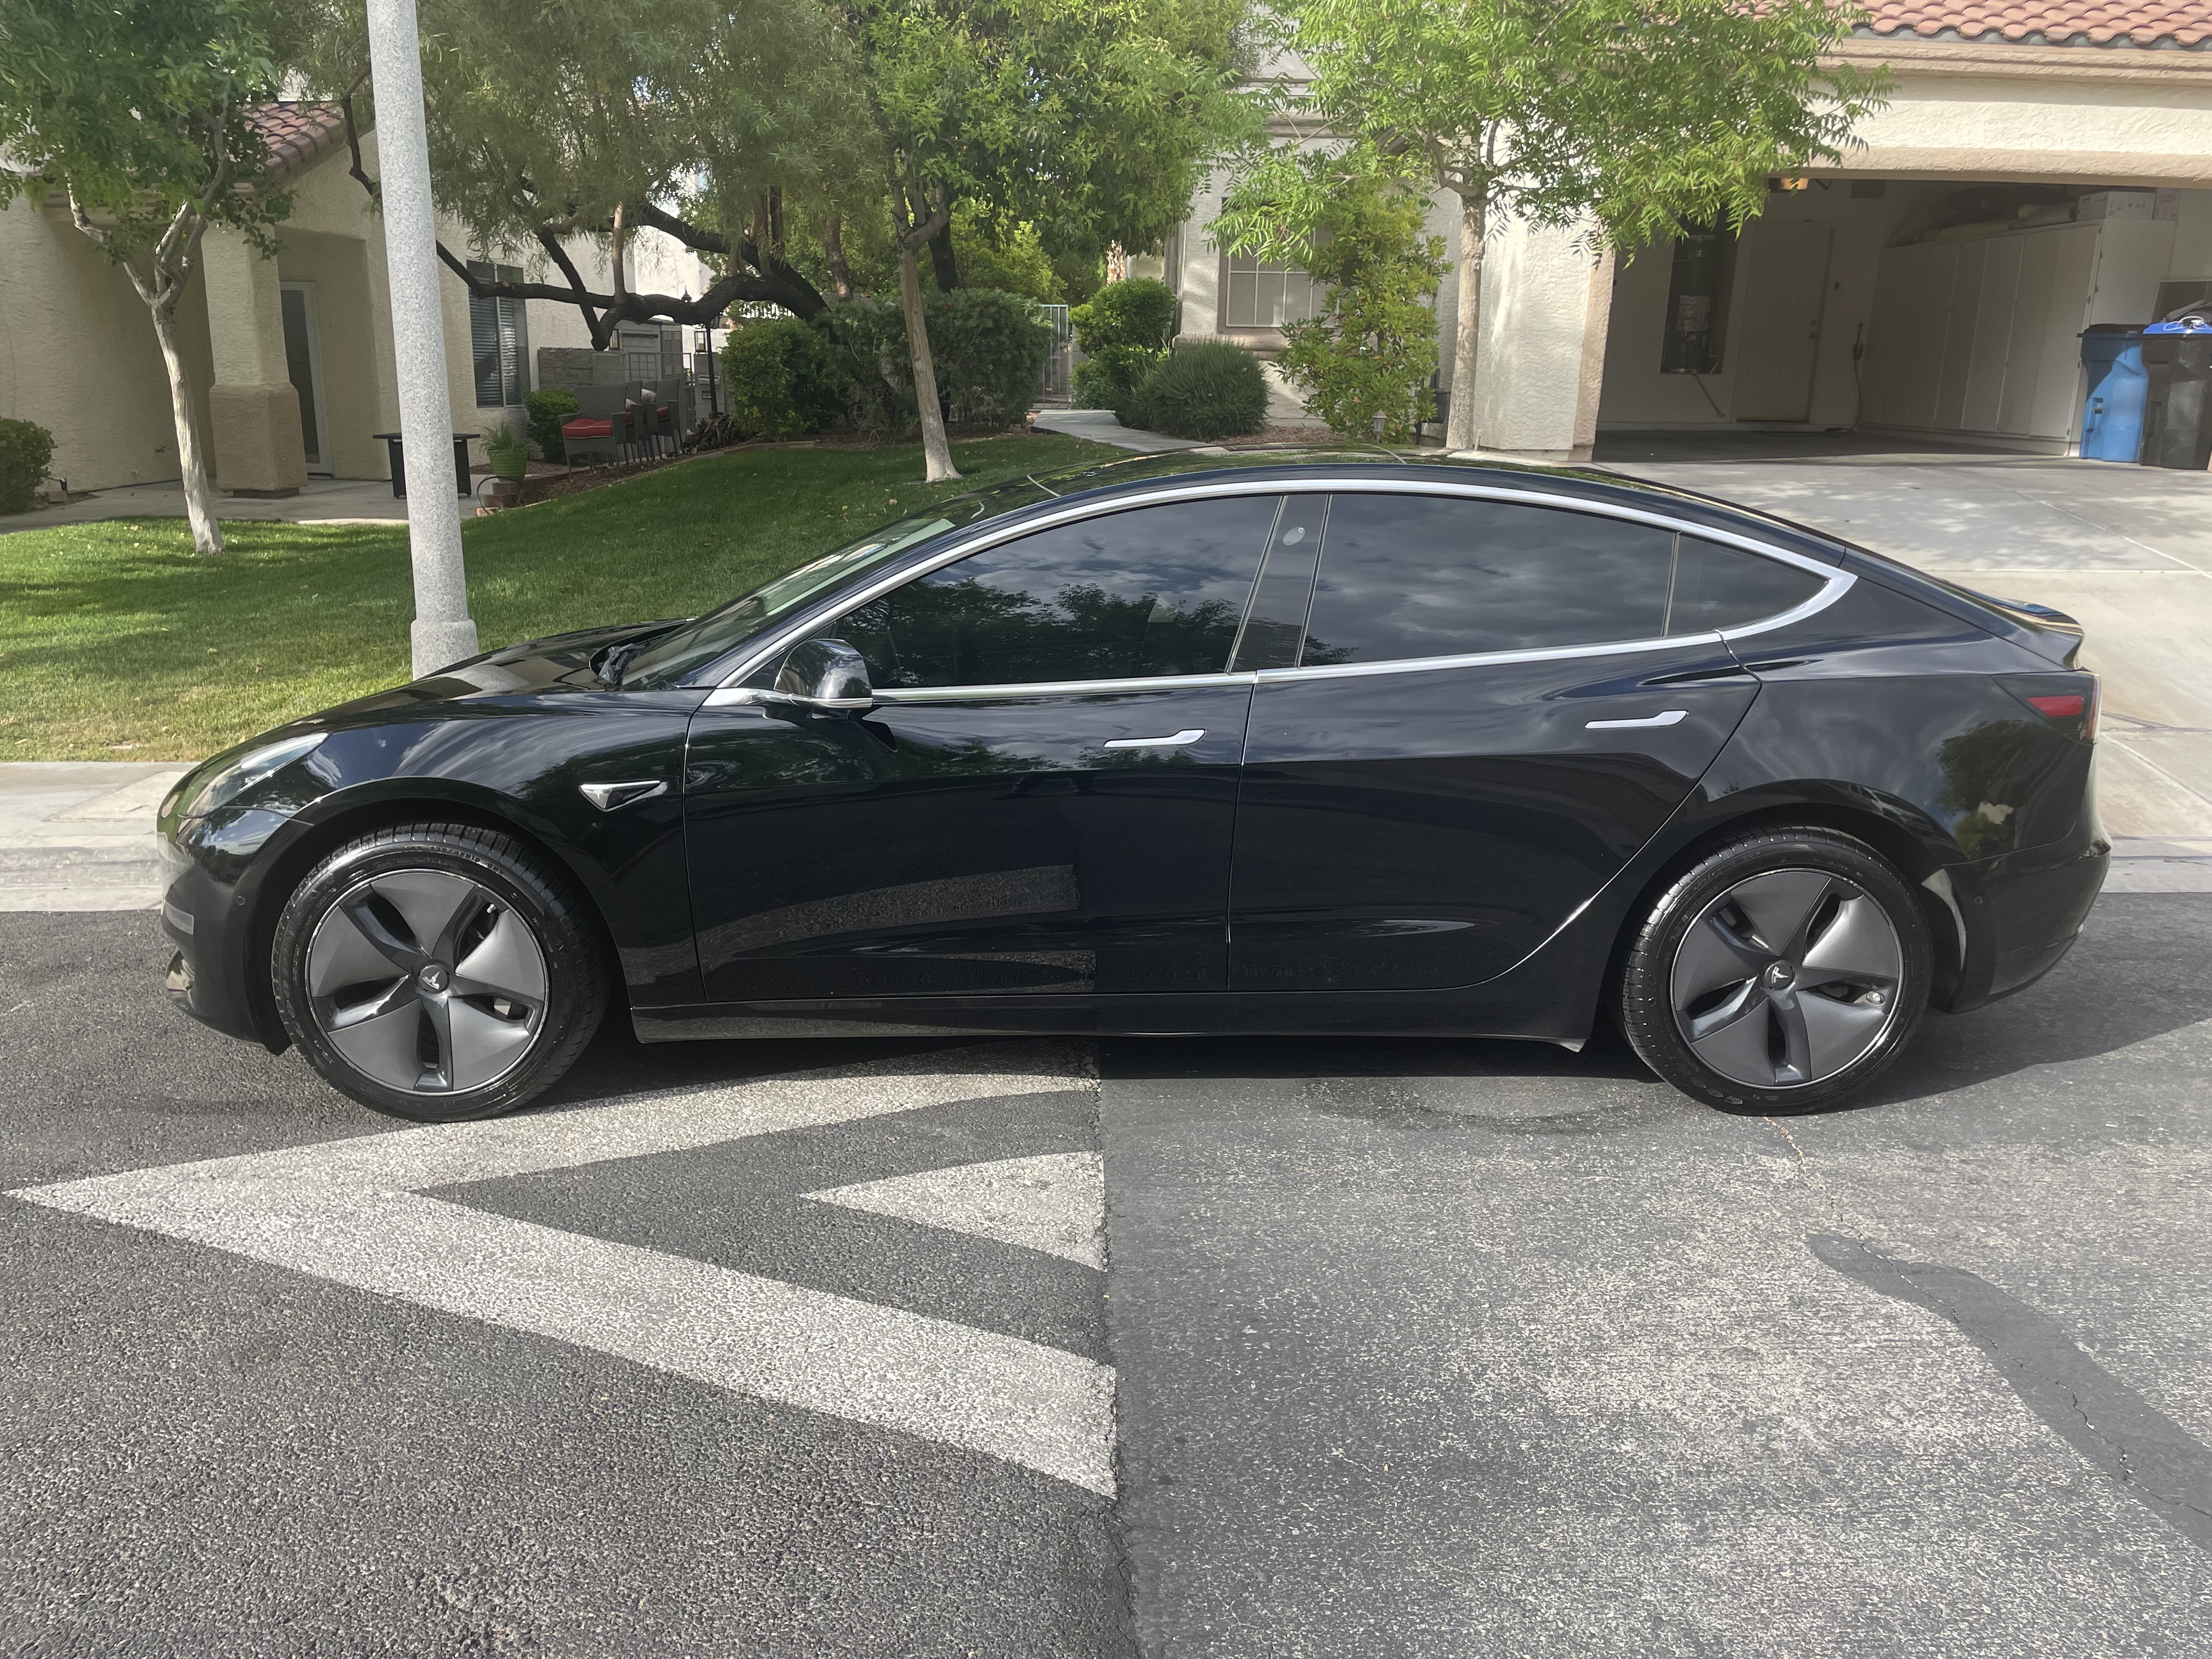 2019 Tesla Model 3: Choosing the Right Trim - Autotrader